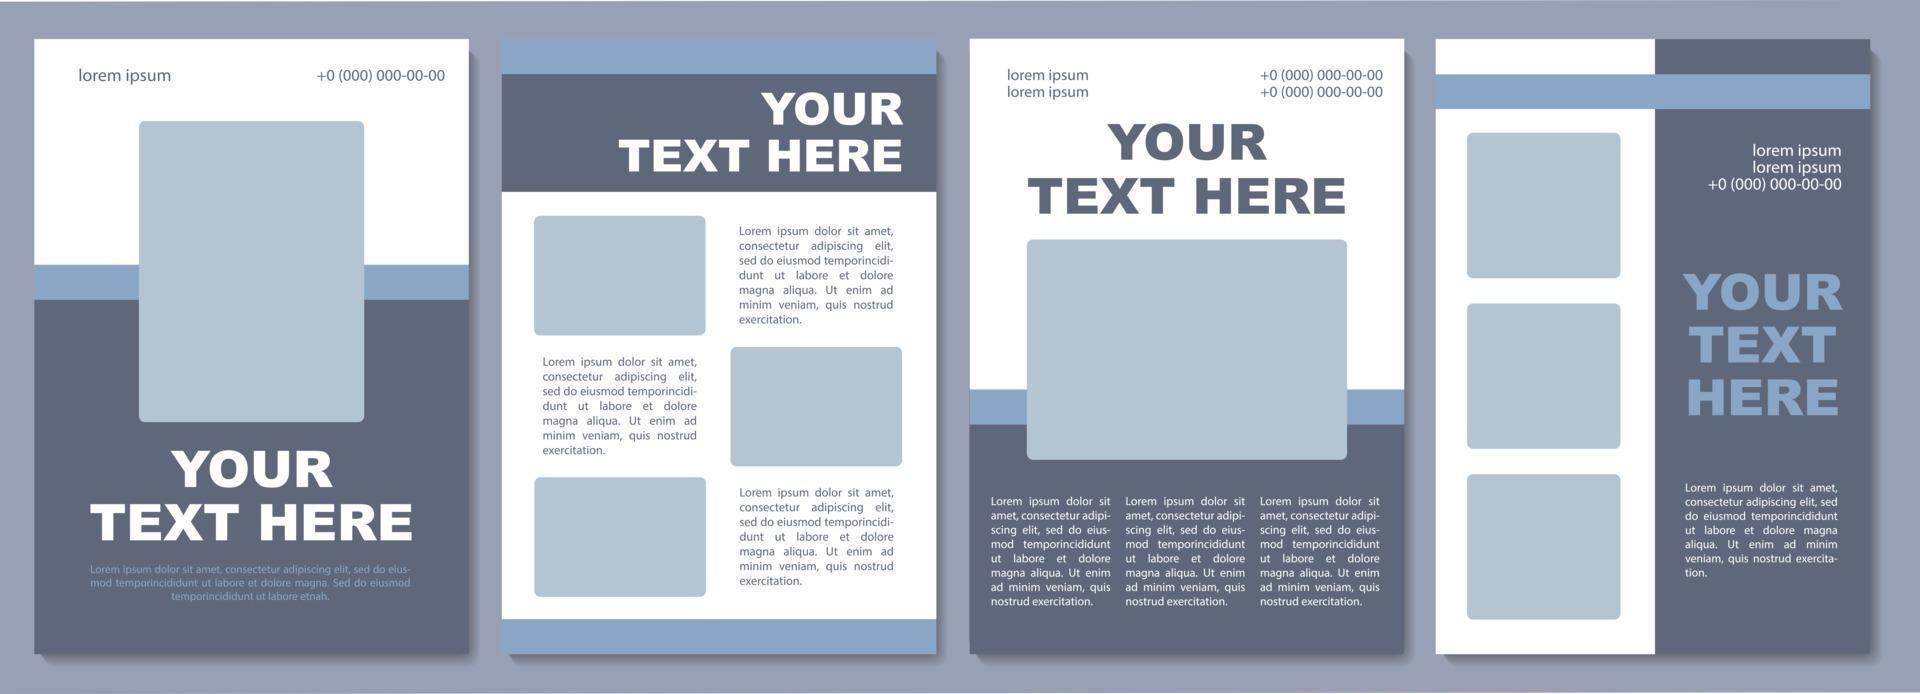 Social media marketing campaign brochure template vector